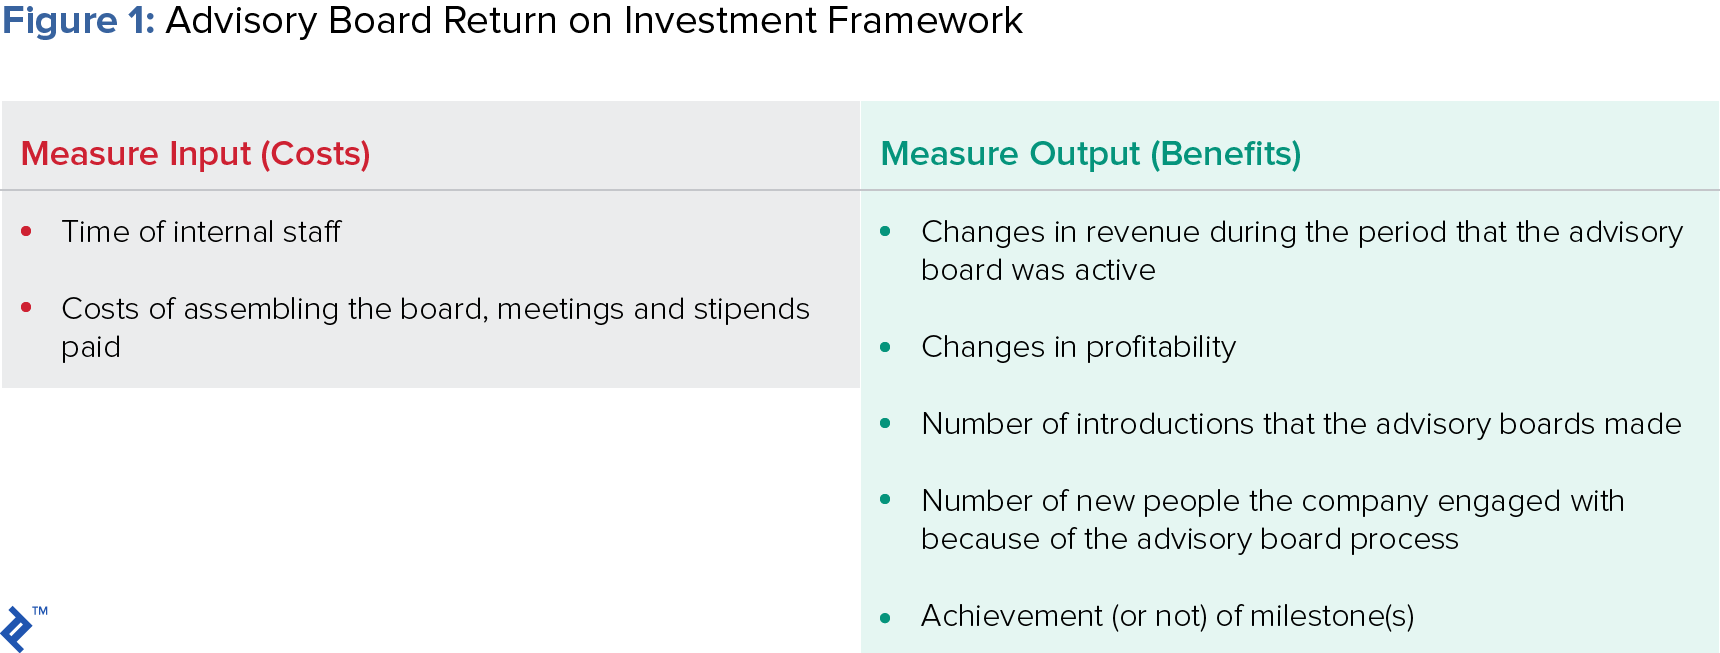 figure showing advisory board return on investment framework